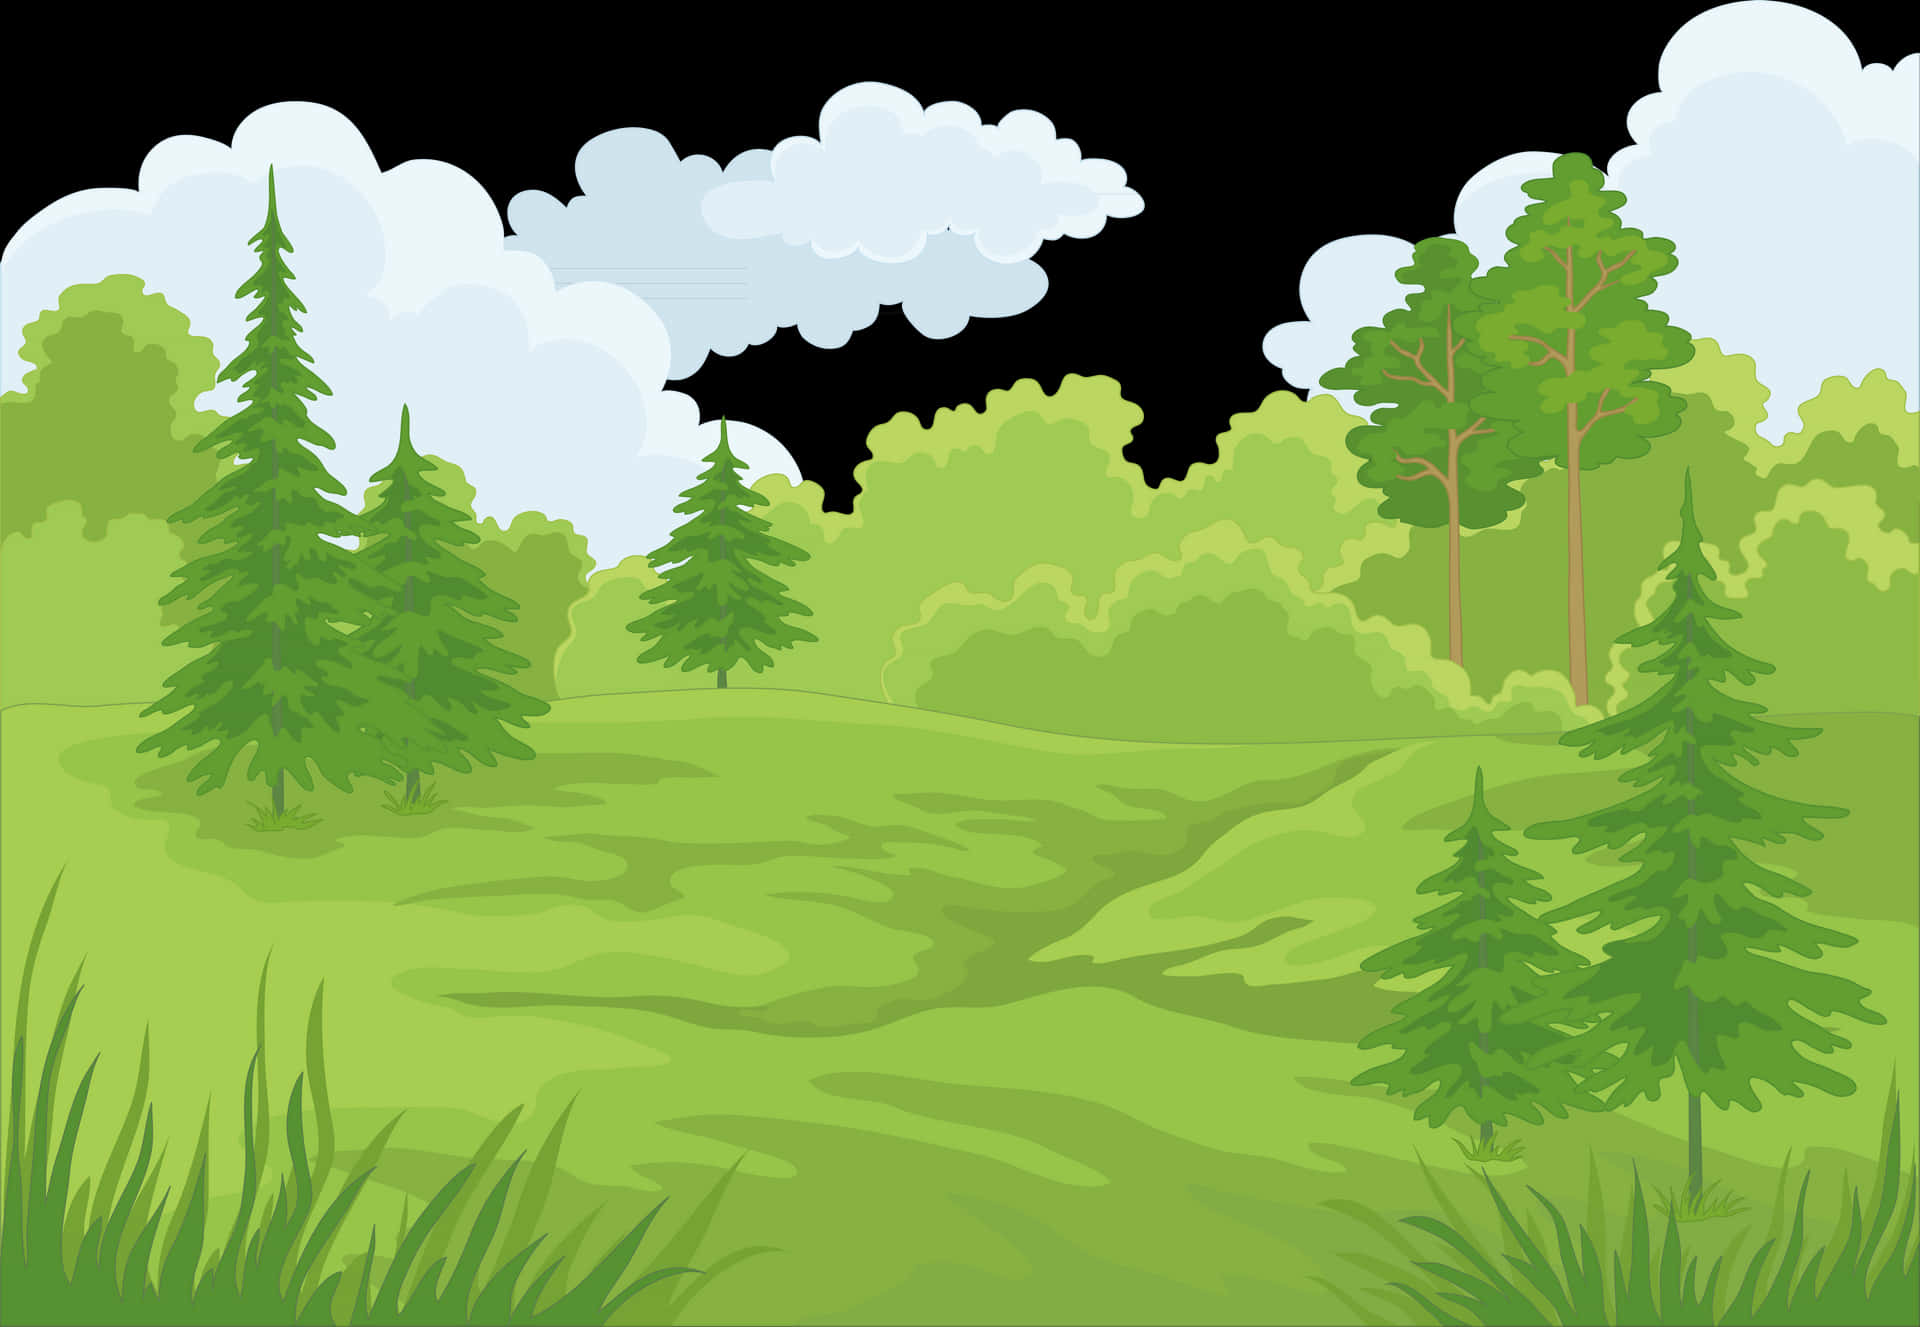 Take A Walk Through Cartoon Forest